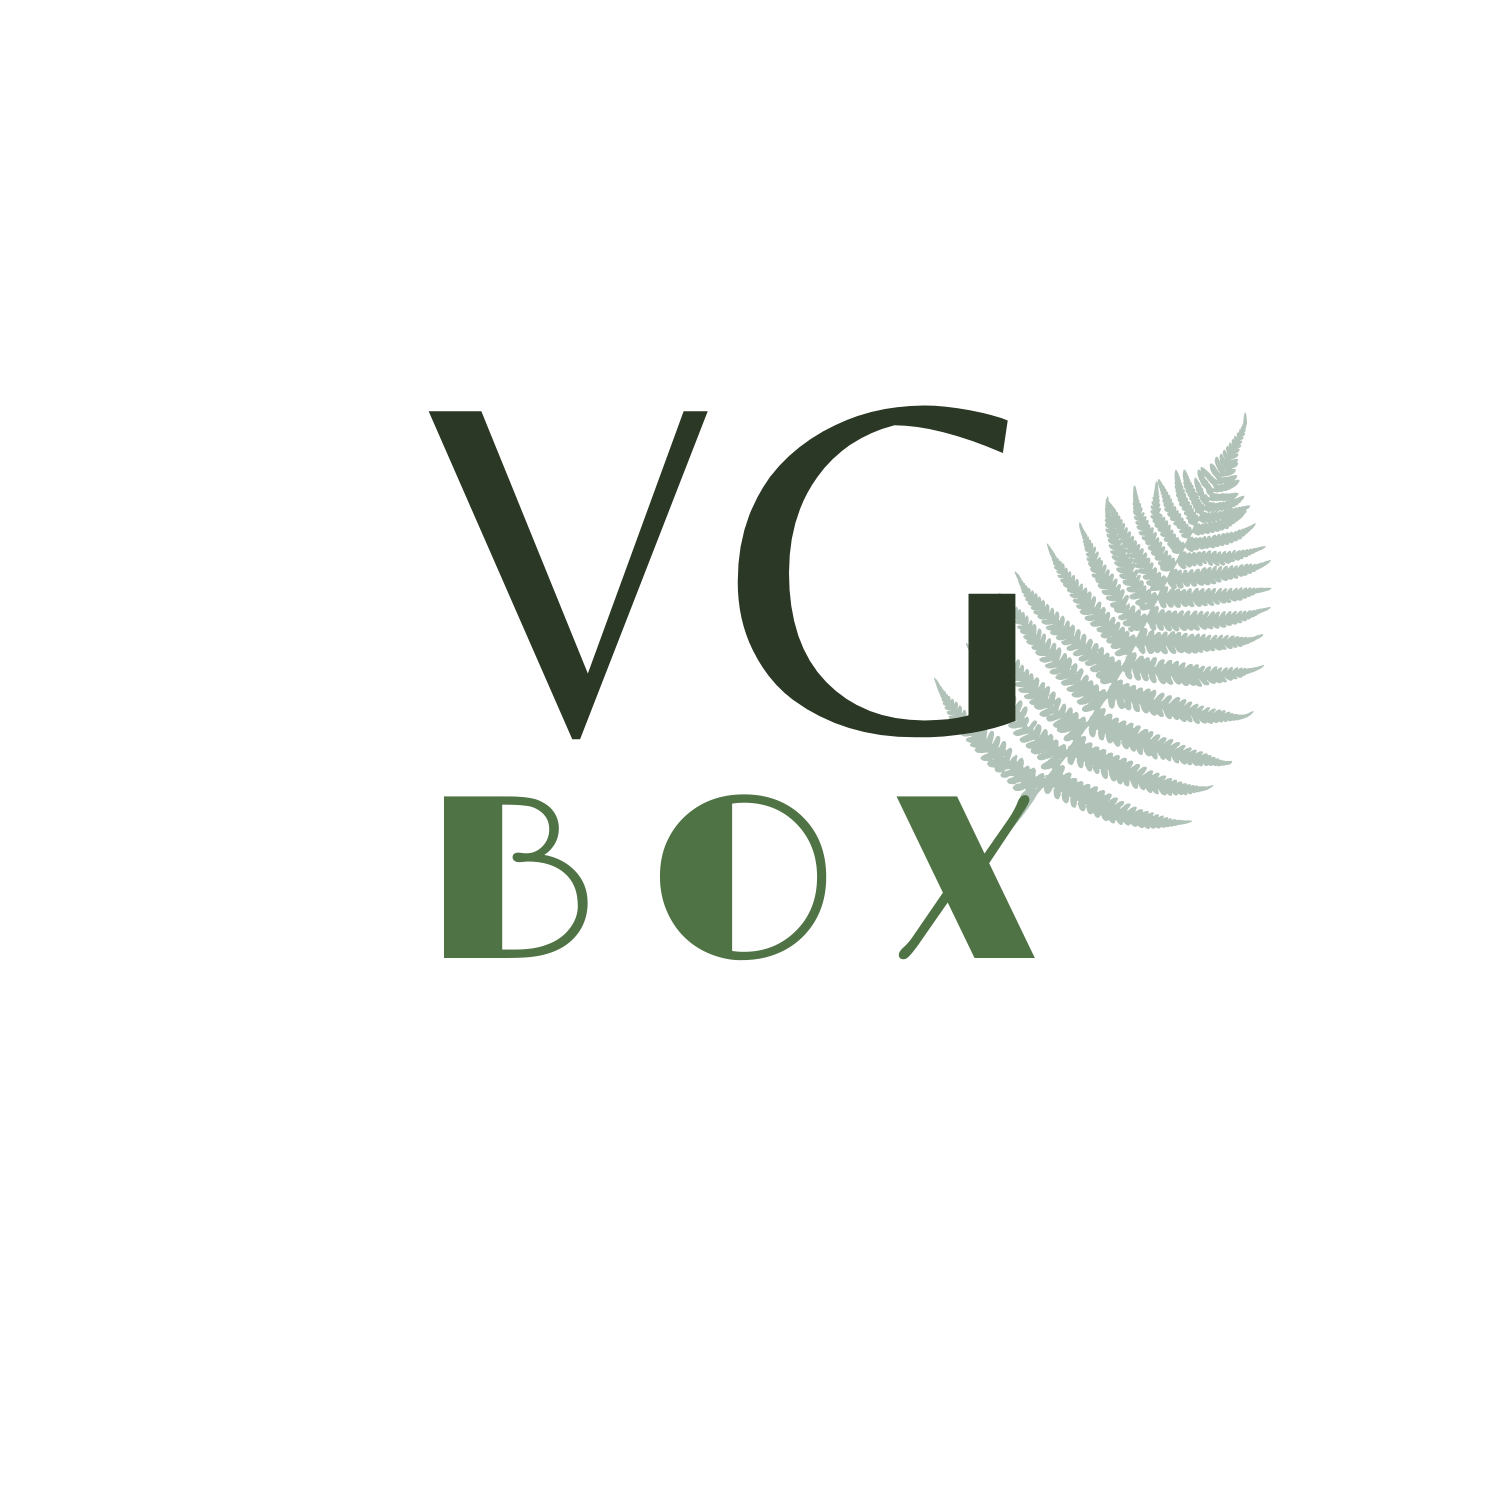 VG Box